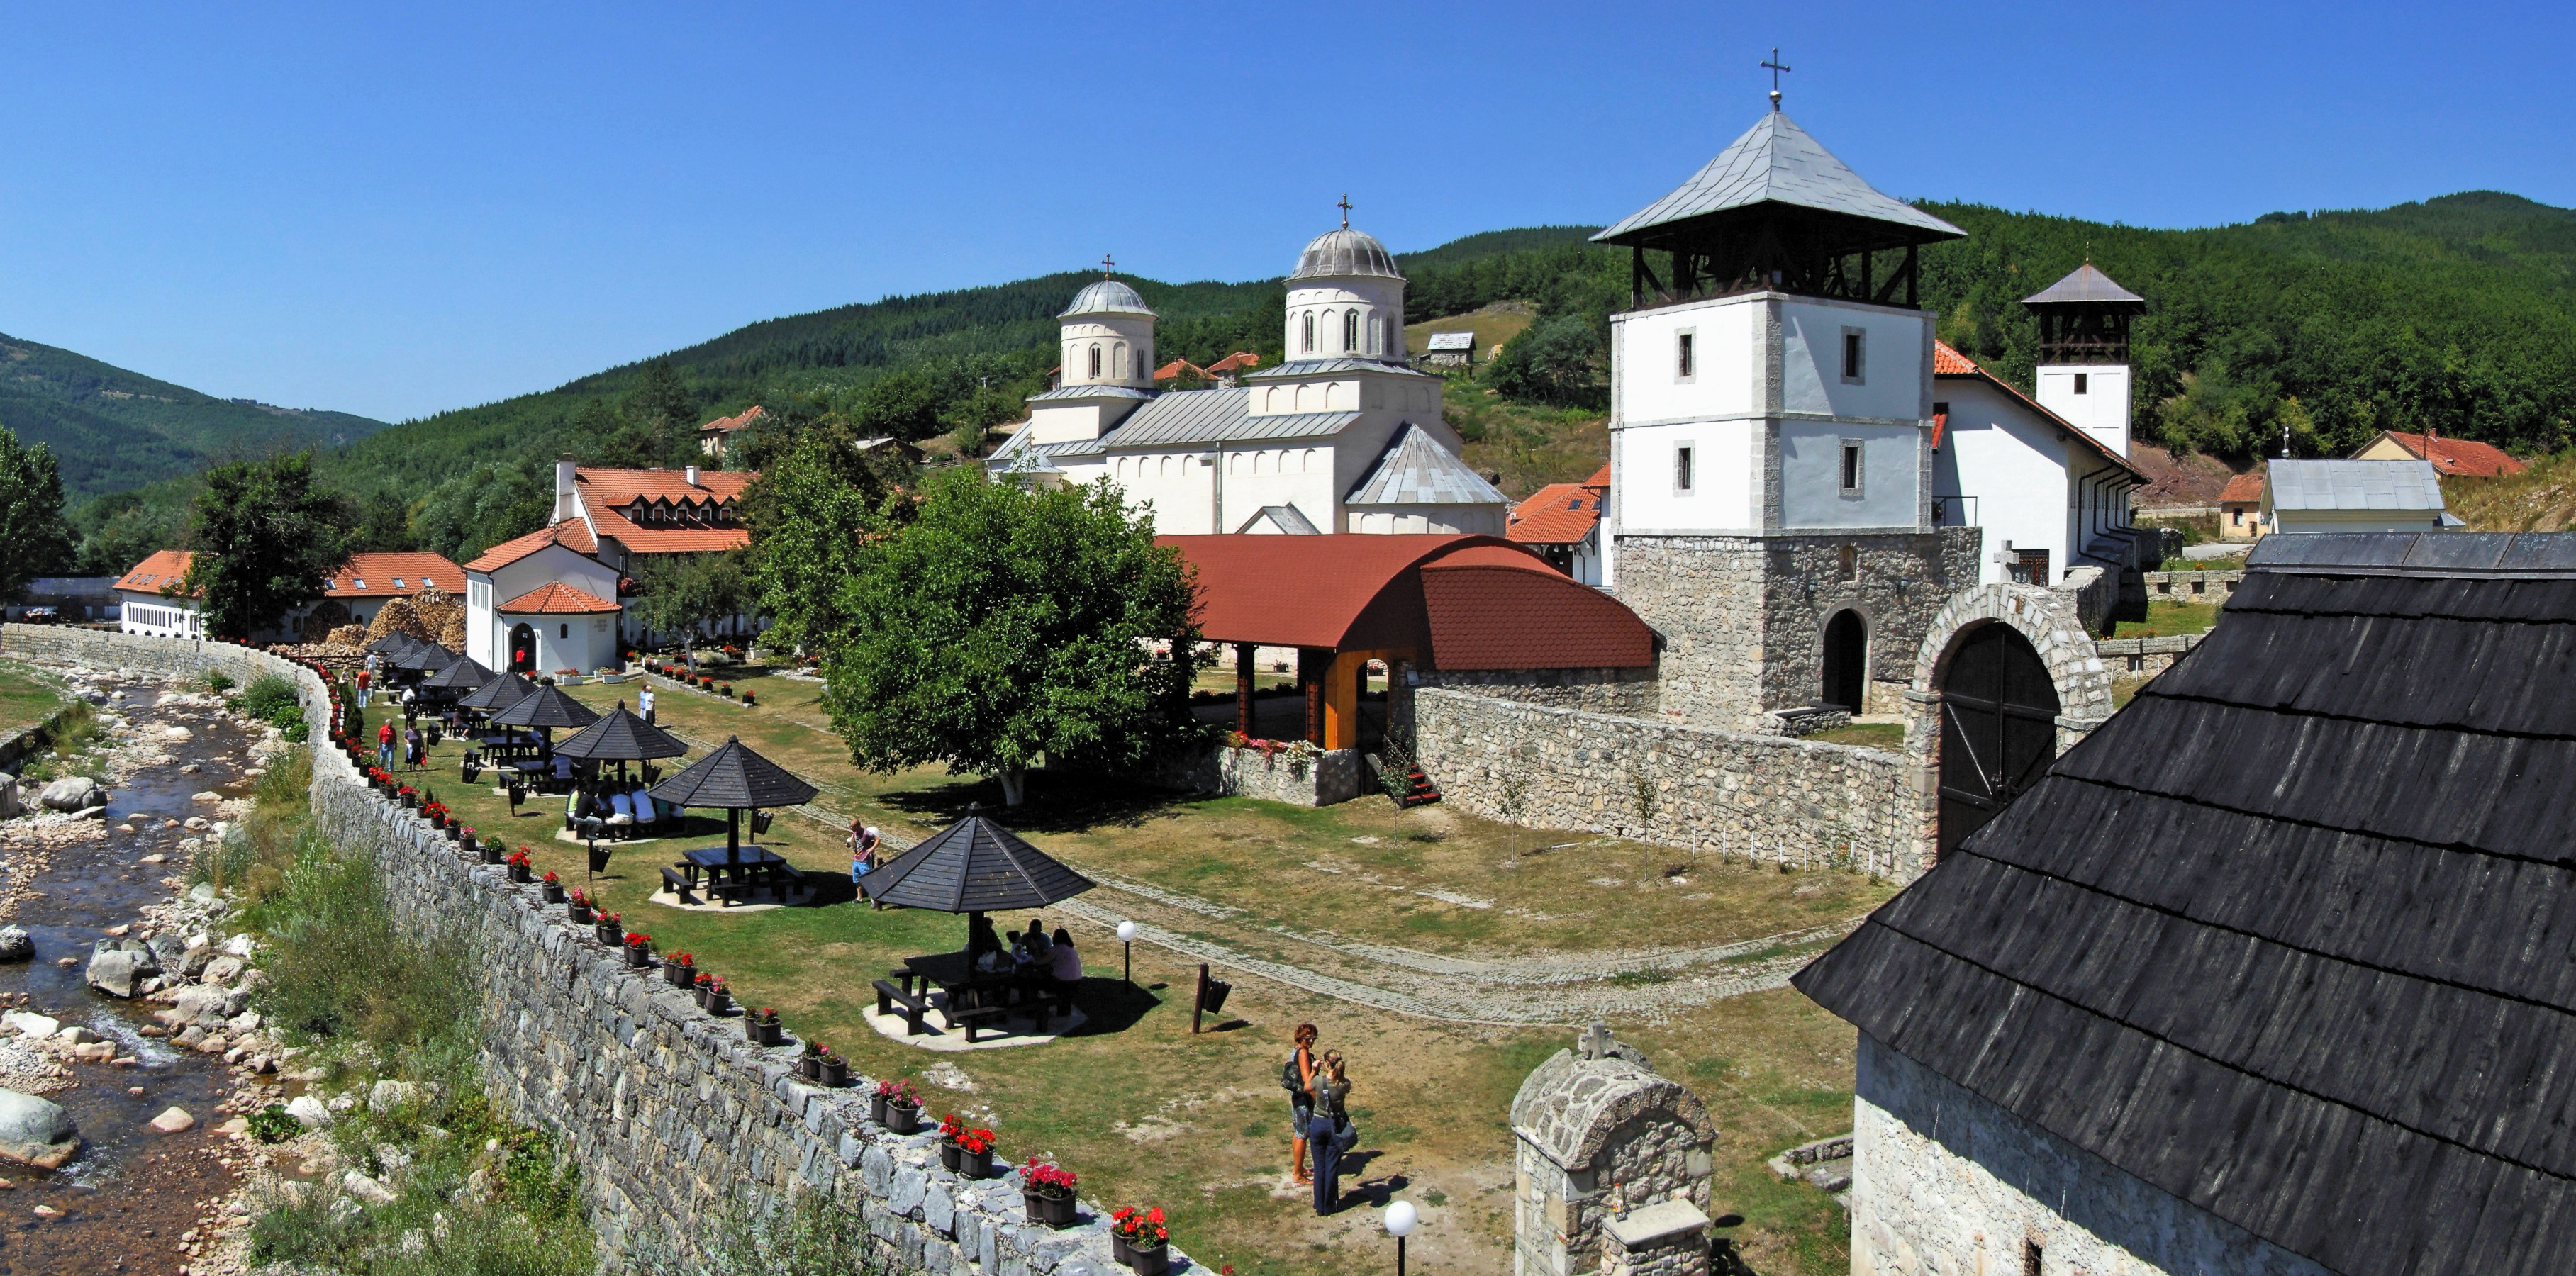 Monastery: cheap accommodation